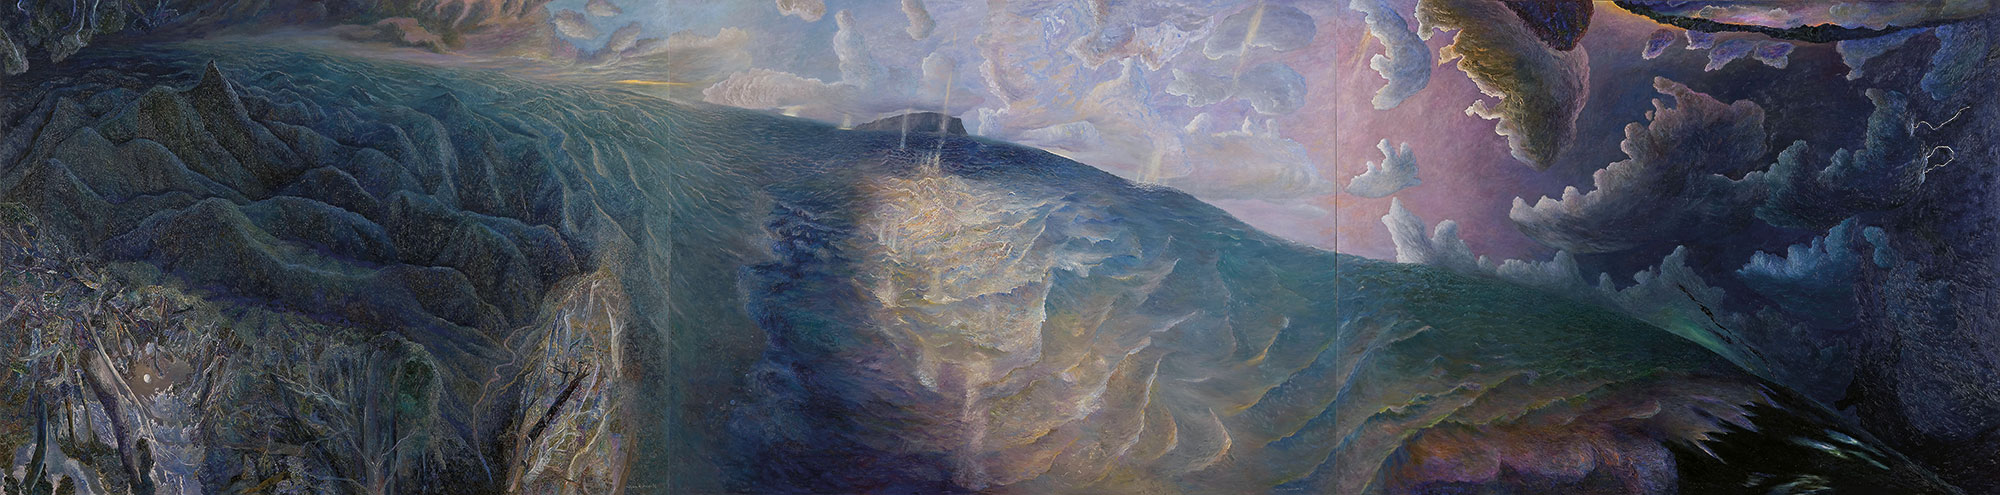 William ROBINSON 'Creation landscape: Earth and sea'